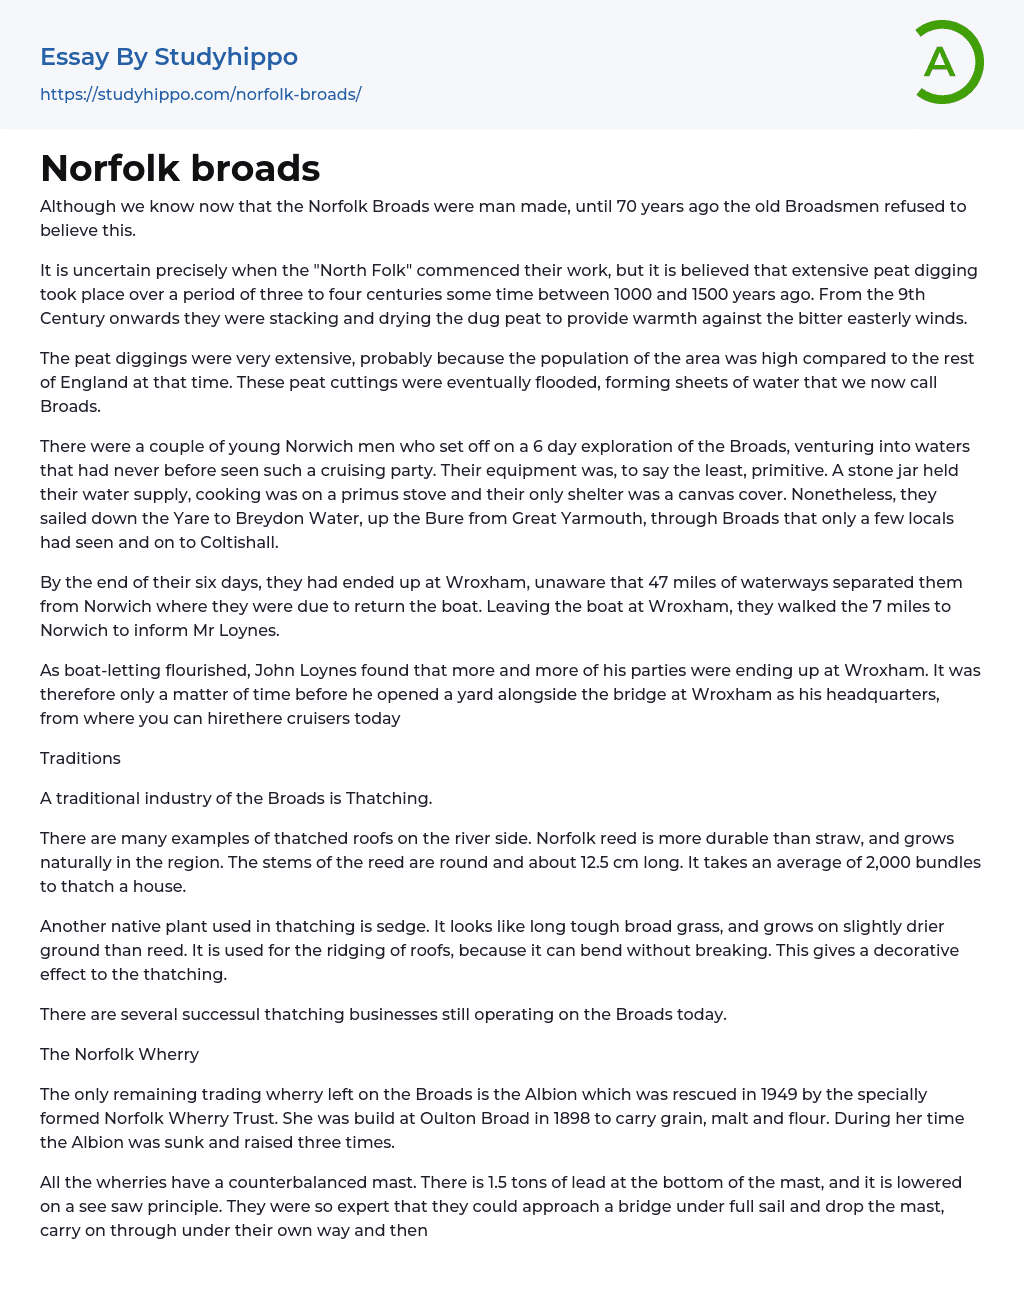 Norfolk broads Essay Example